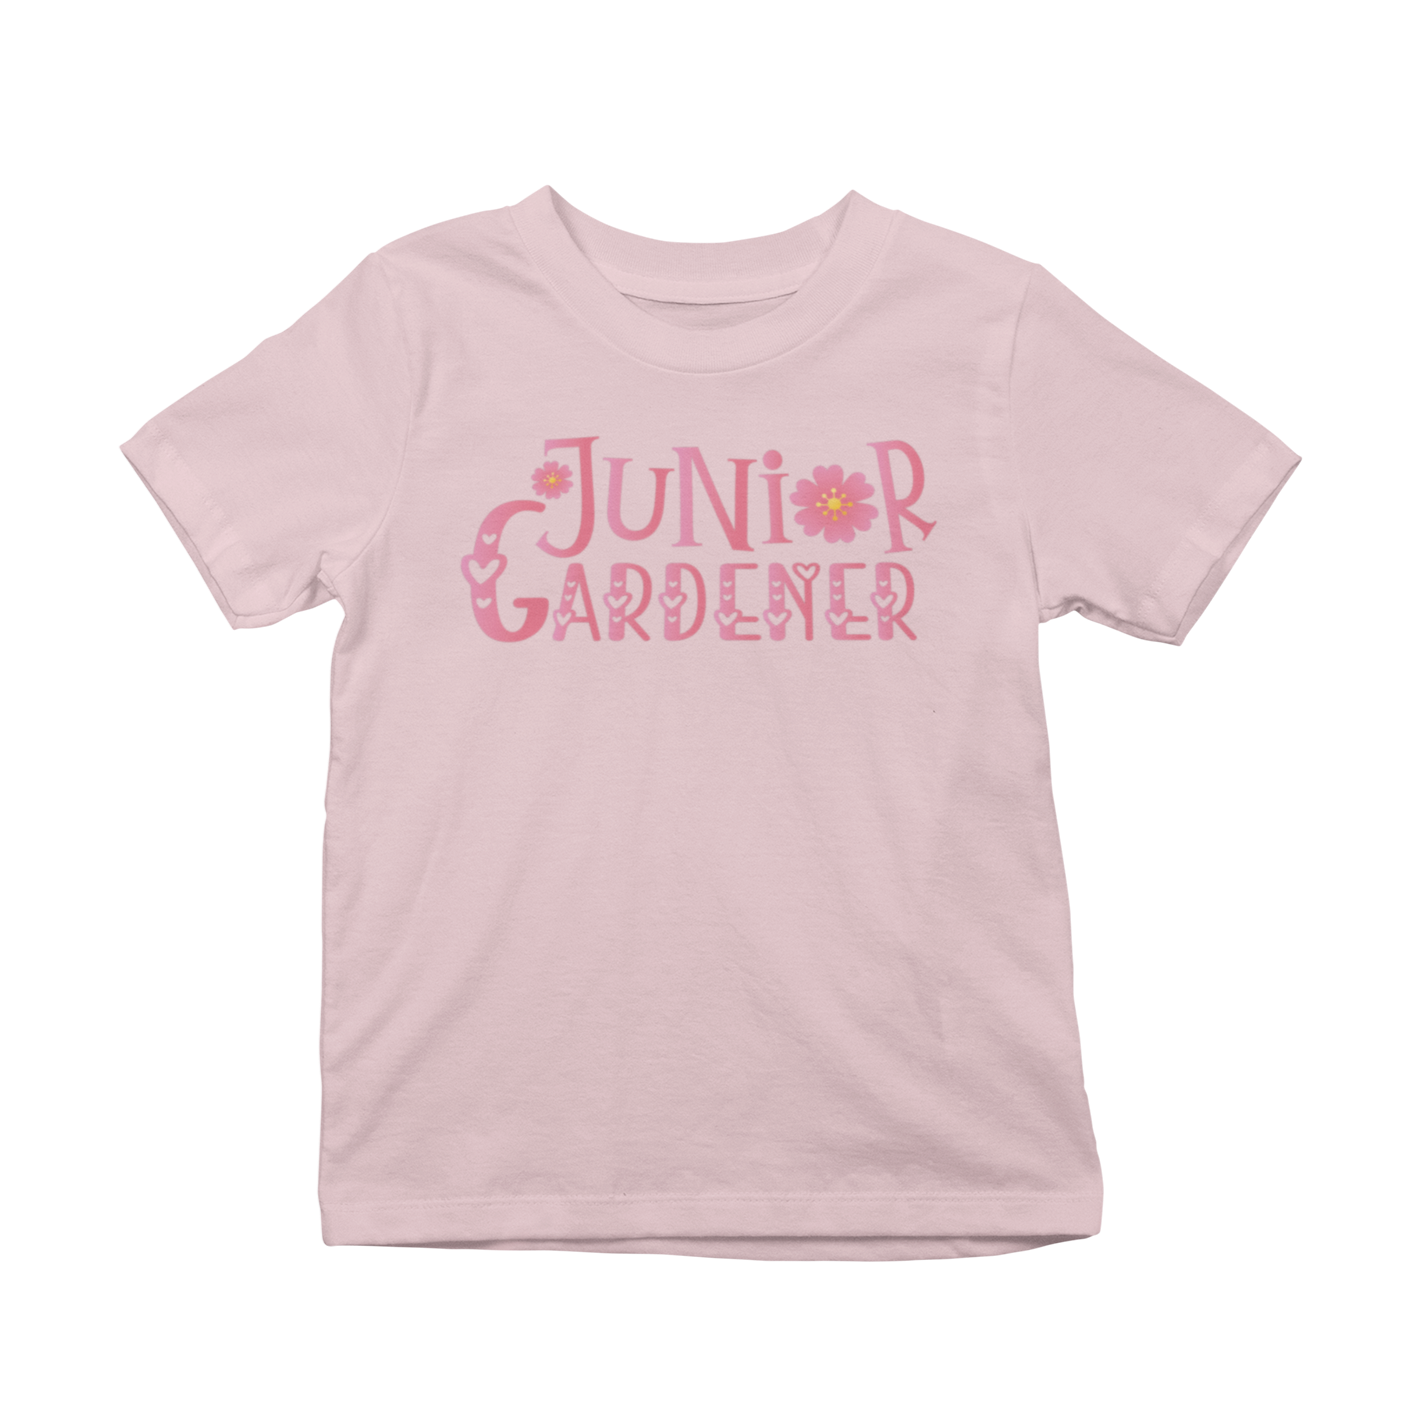 Junior Gardener Toddler Short Sleeve Tee